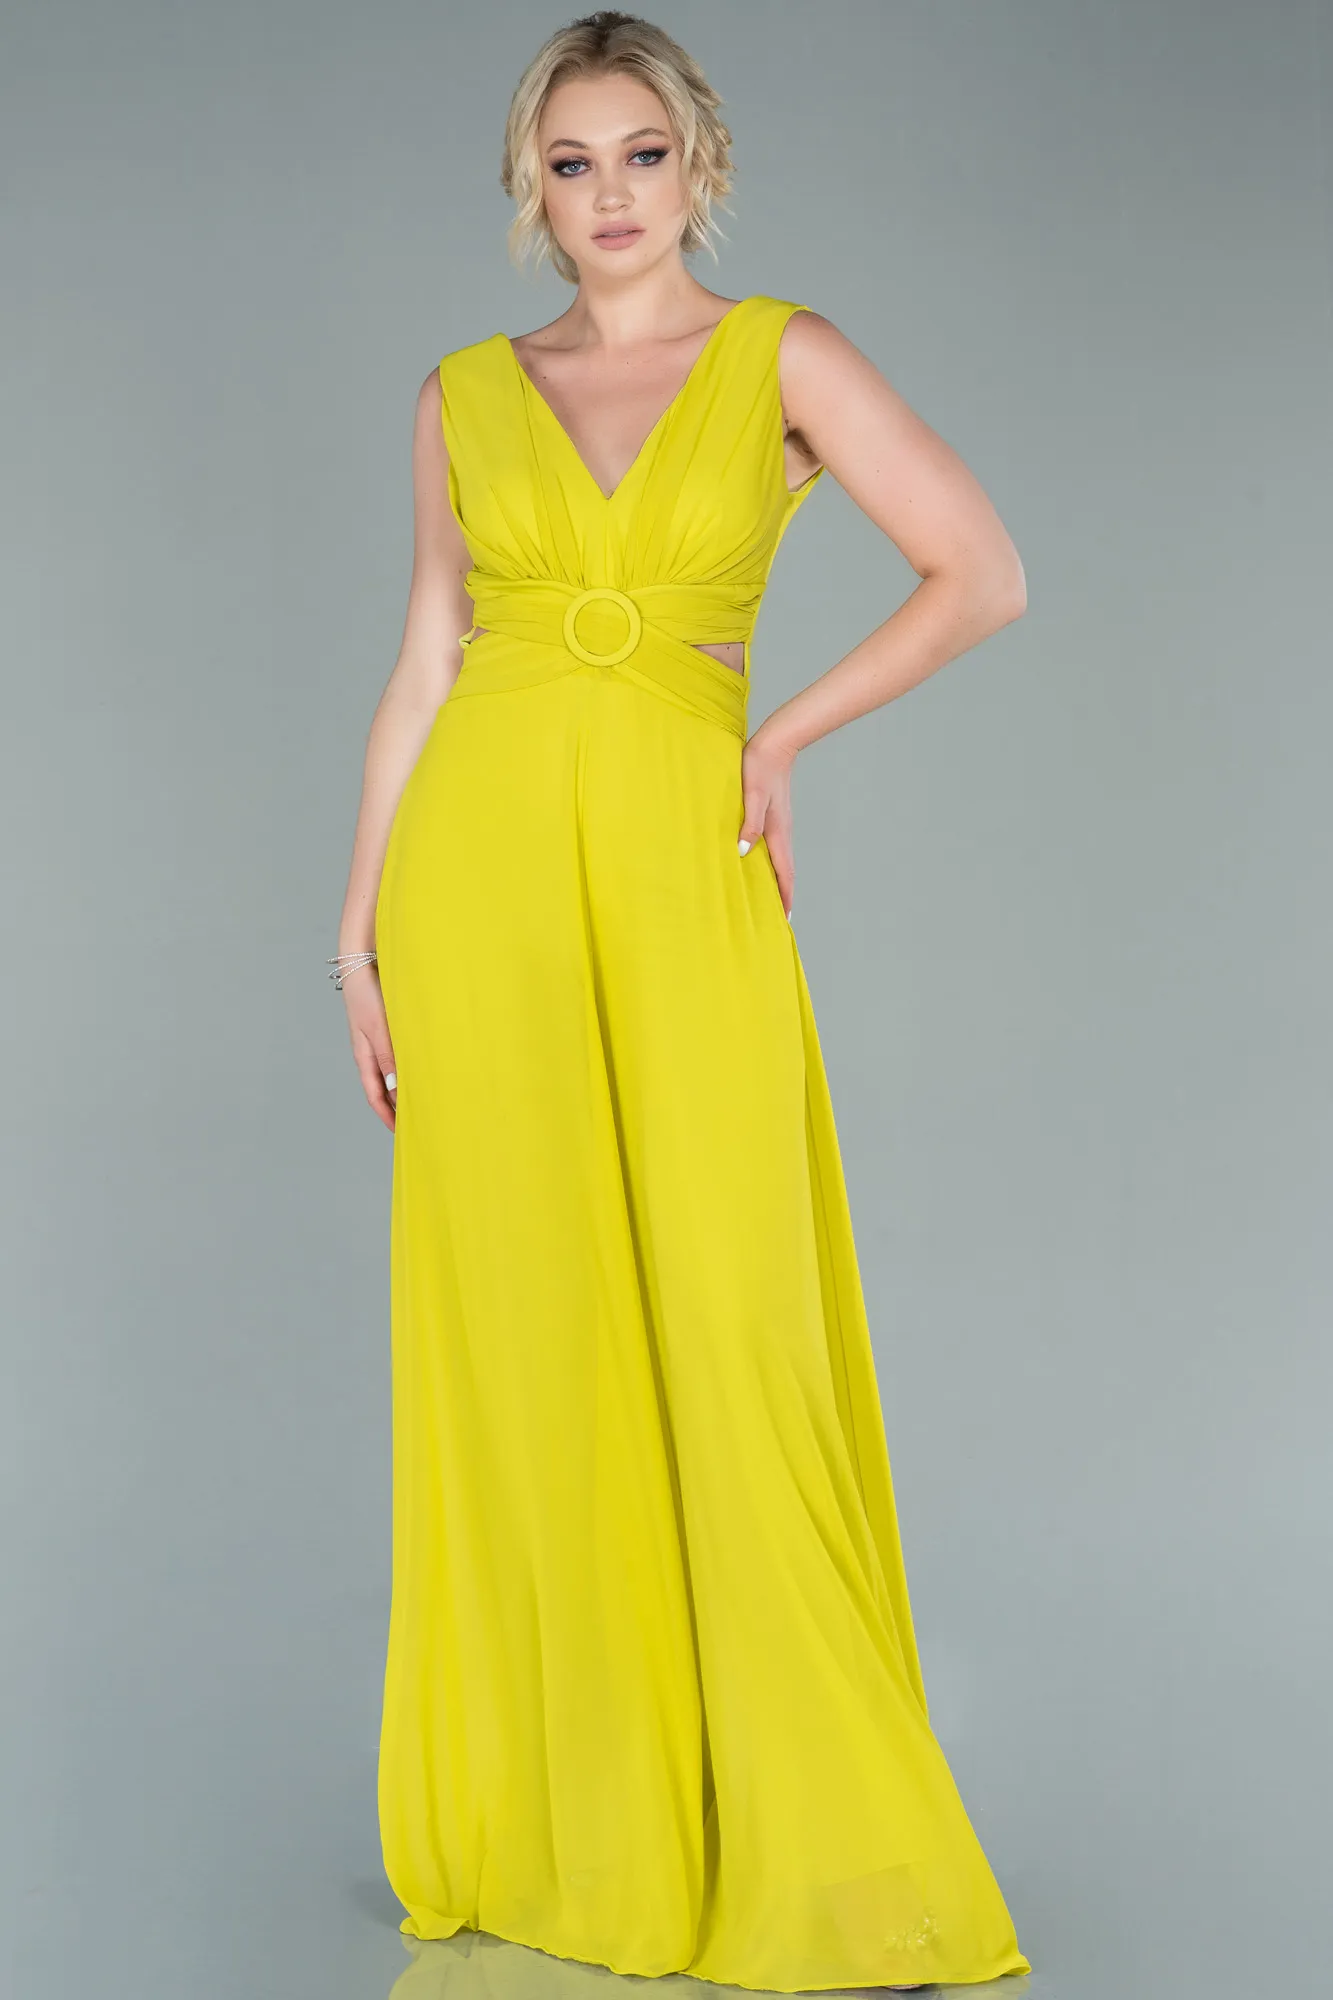 Pistachio Green-Chiffon Invitation Dress ABT075